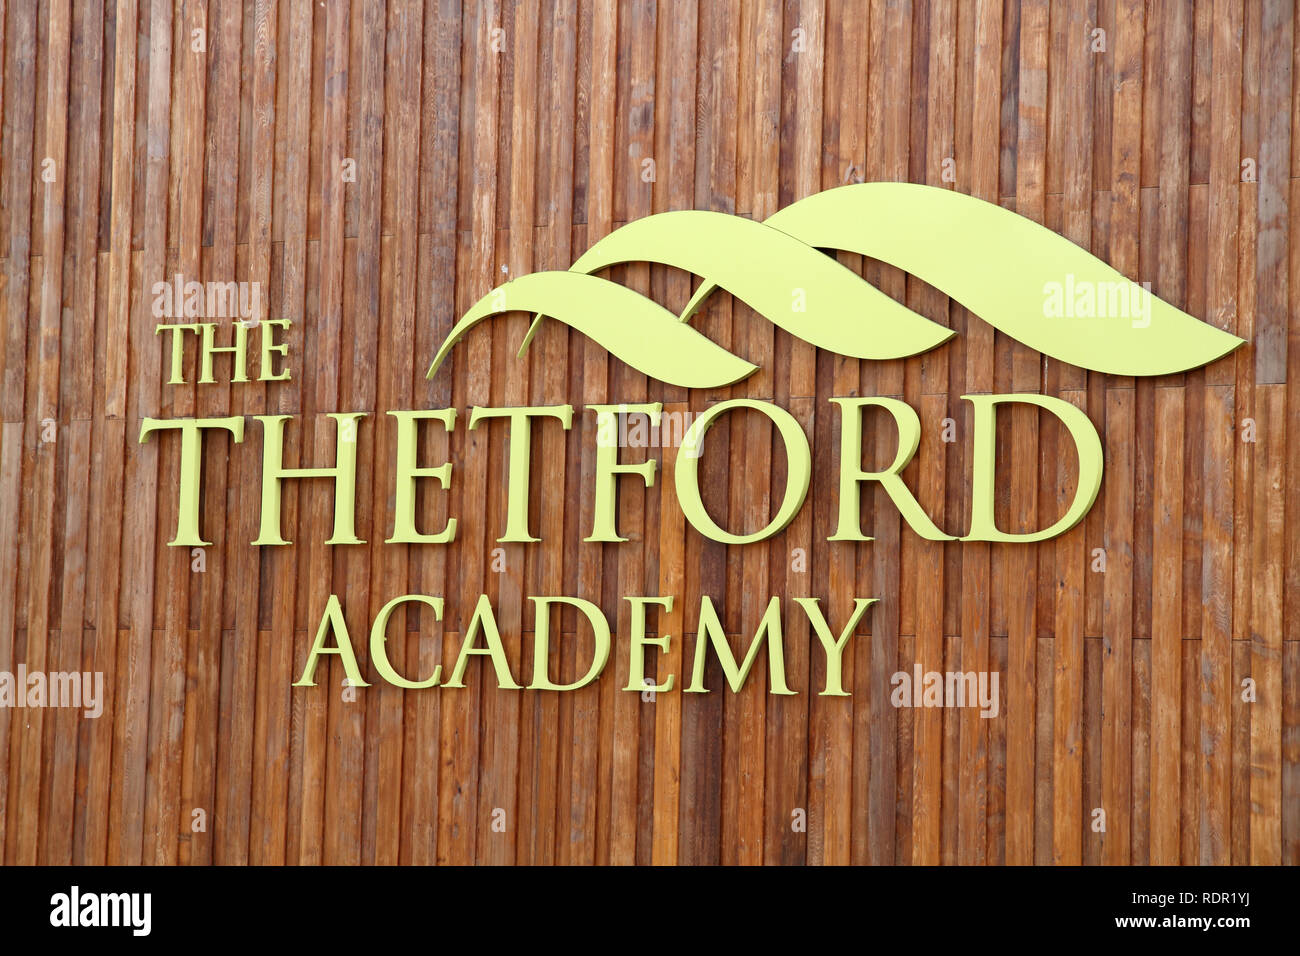 The Thetford Academy, Norfolk, England Stock Photo